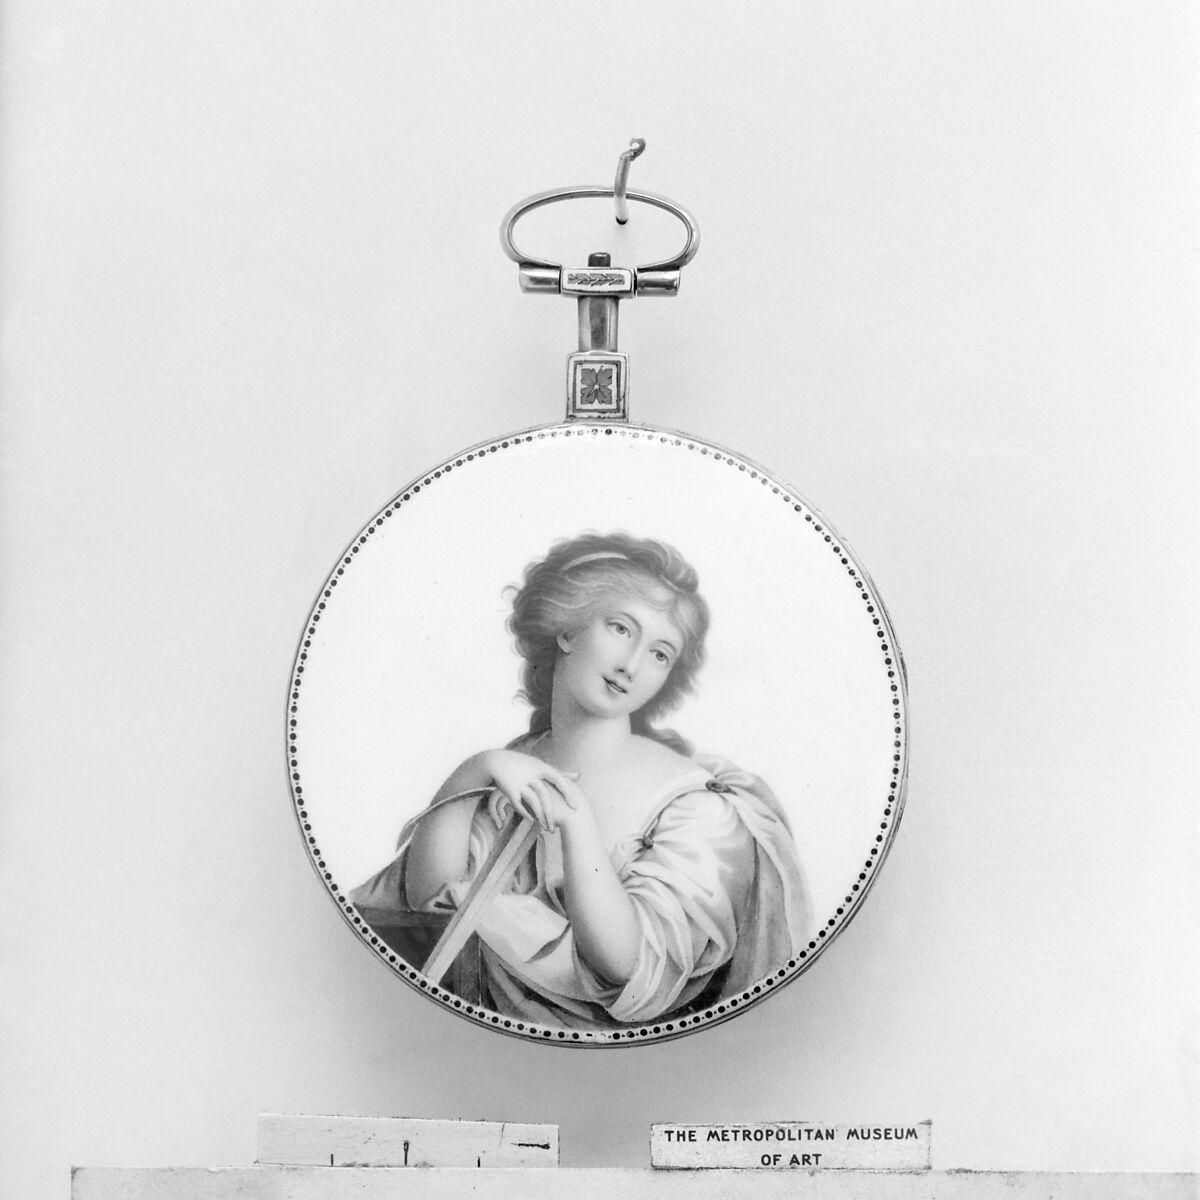 Watch, Watchmaker: Robert Robin (French, 1749–1799), Metal, enamel, French, Paris 